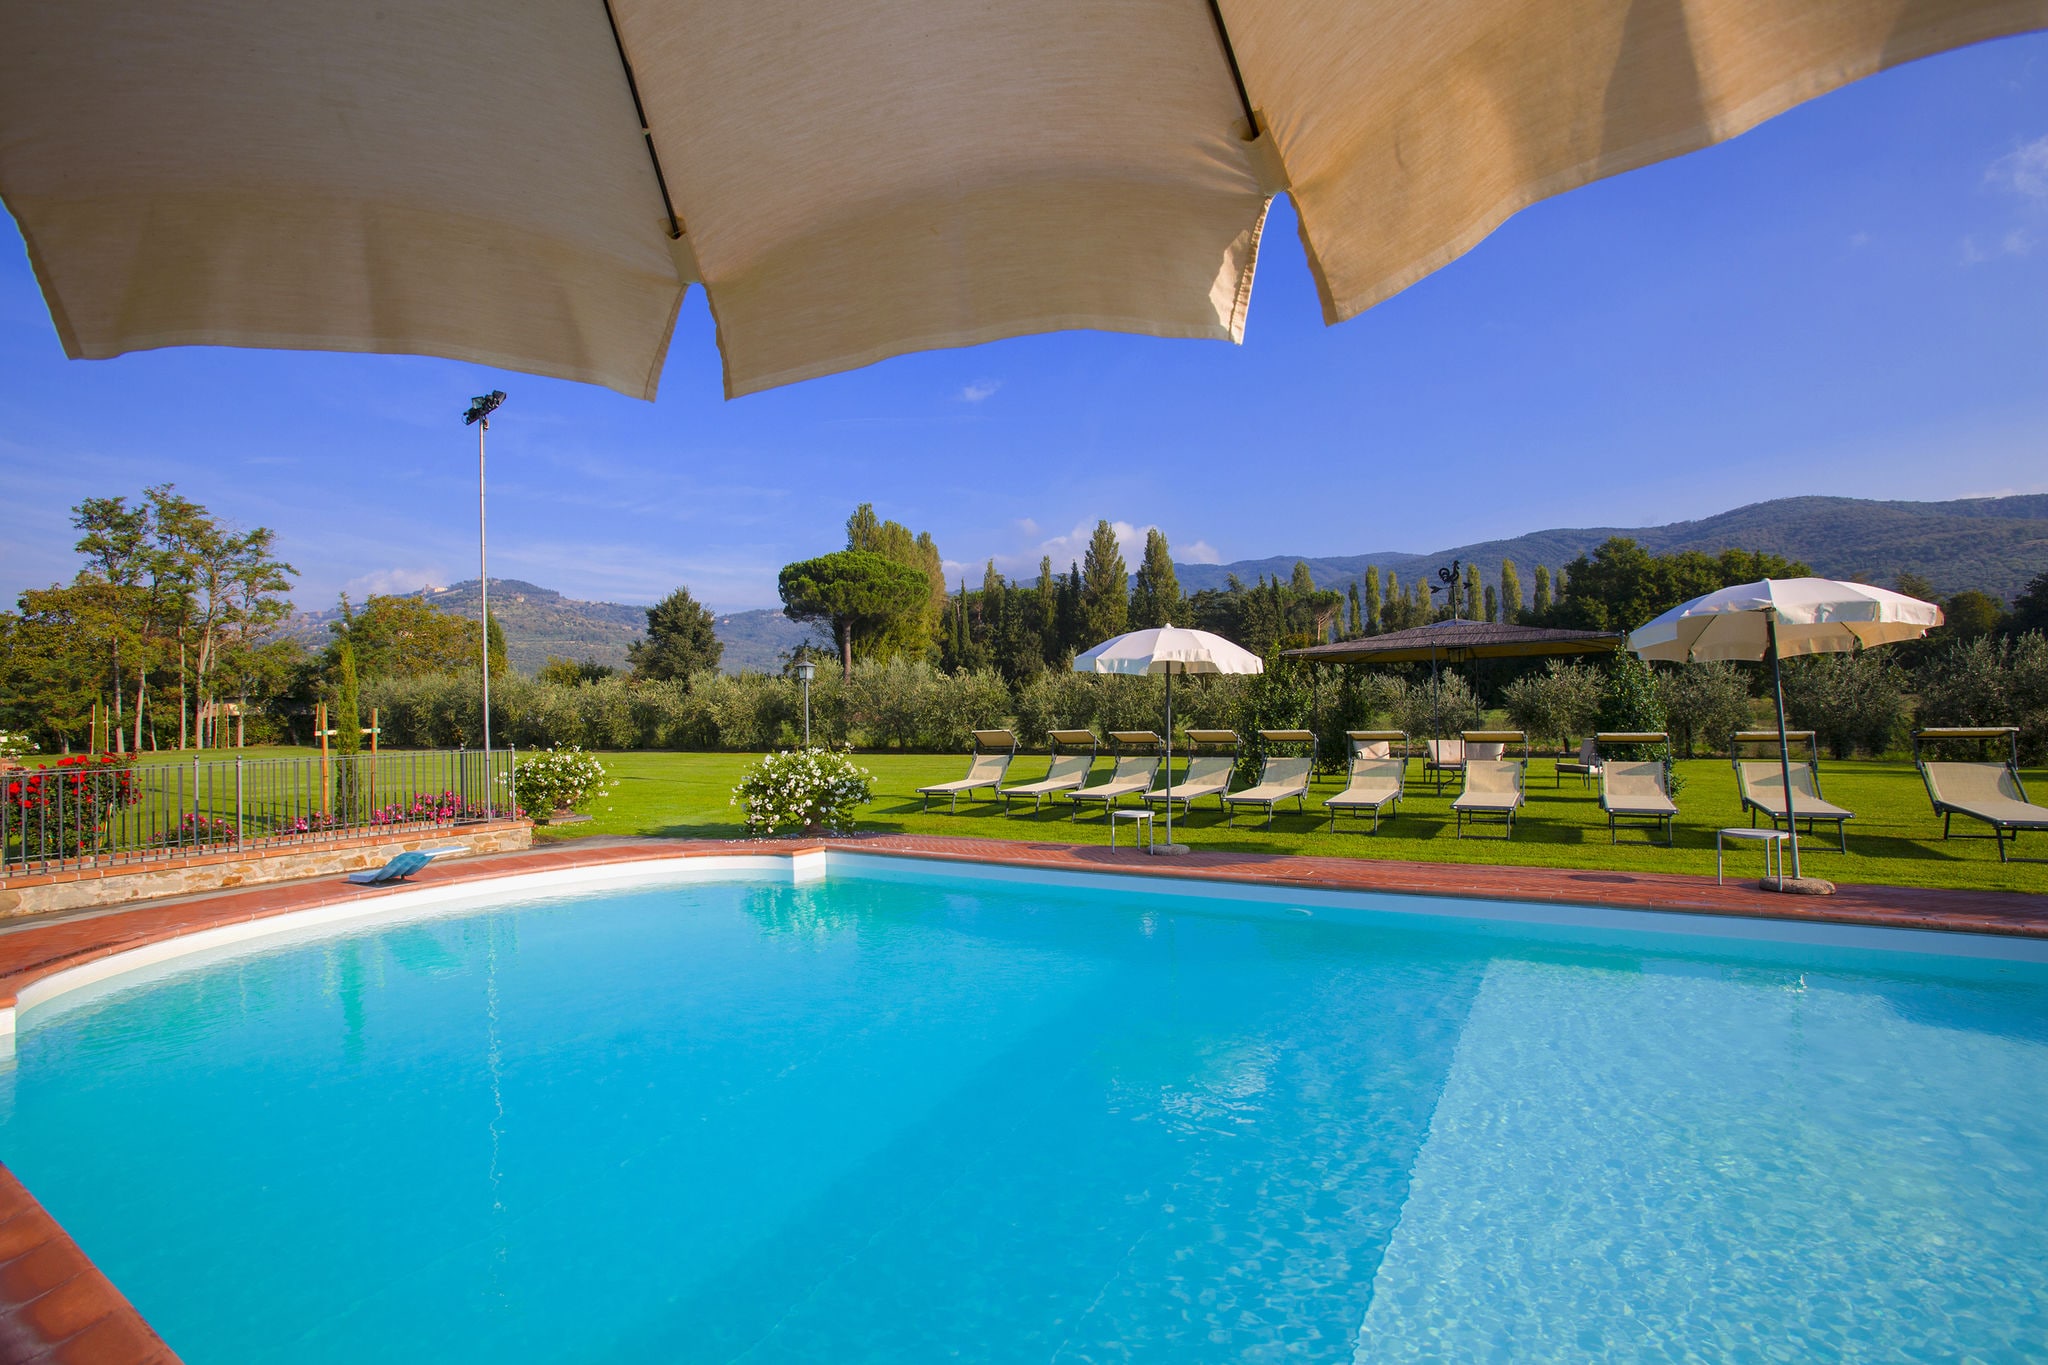 Provinz-Ferienwohnung mit Swimmingpool in Cortona, Toskana